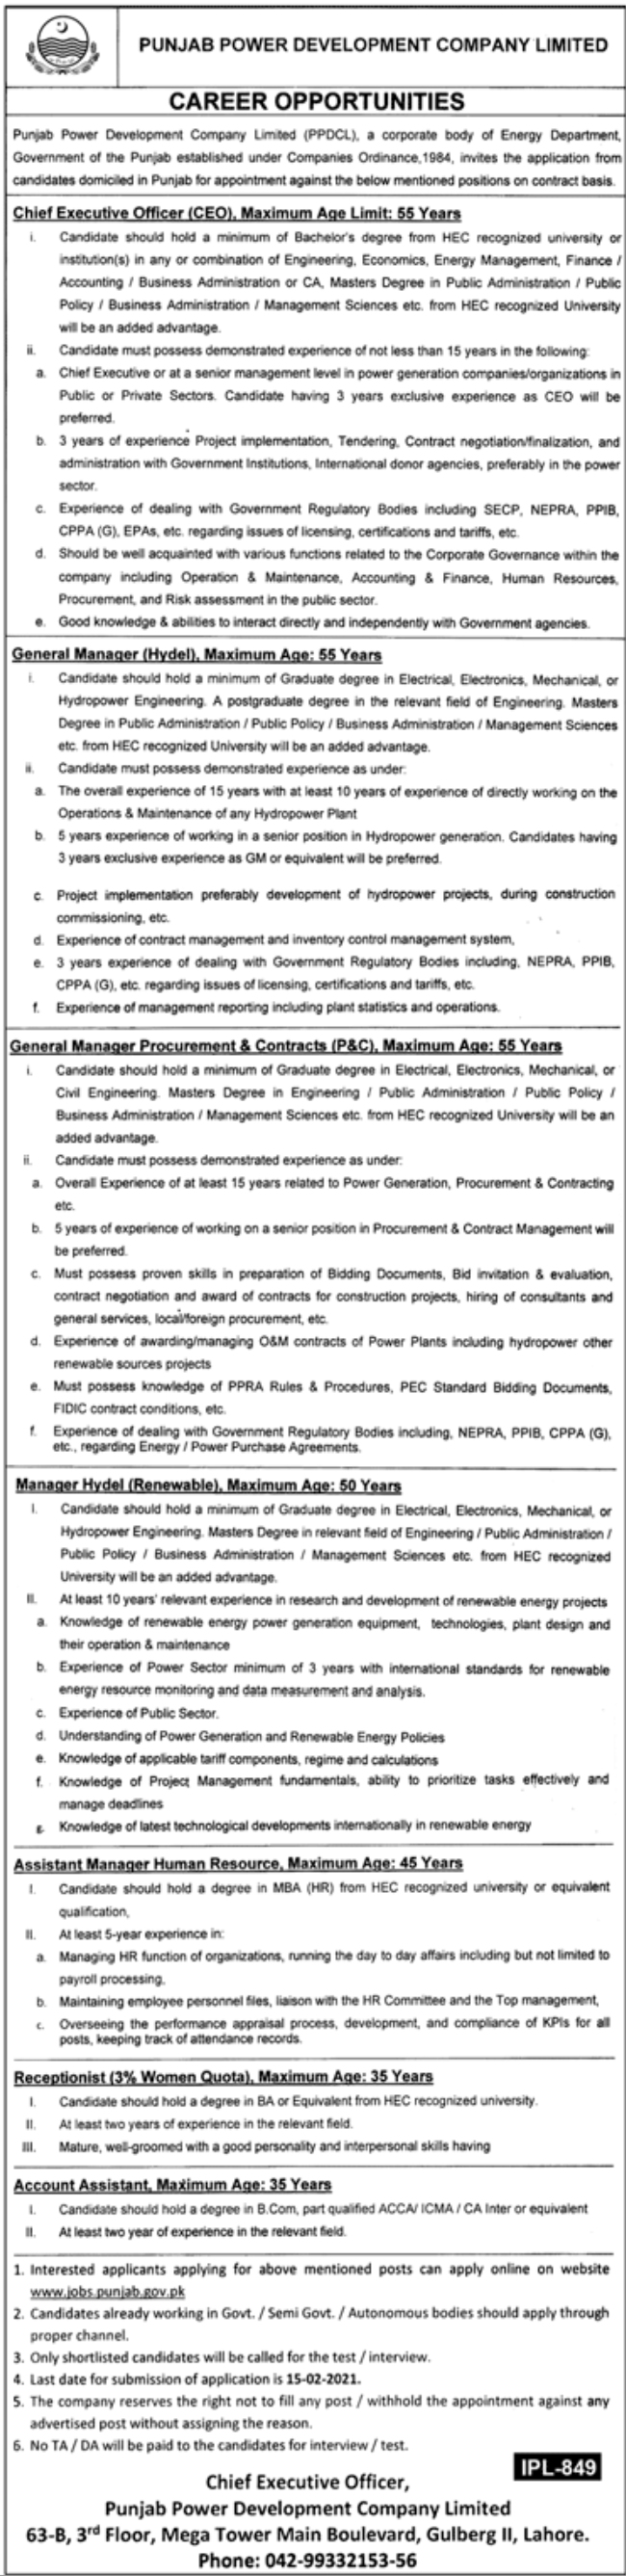 Punjab Power Development Company Limited Jobs 2021